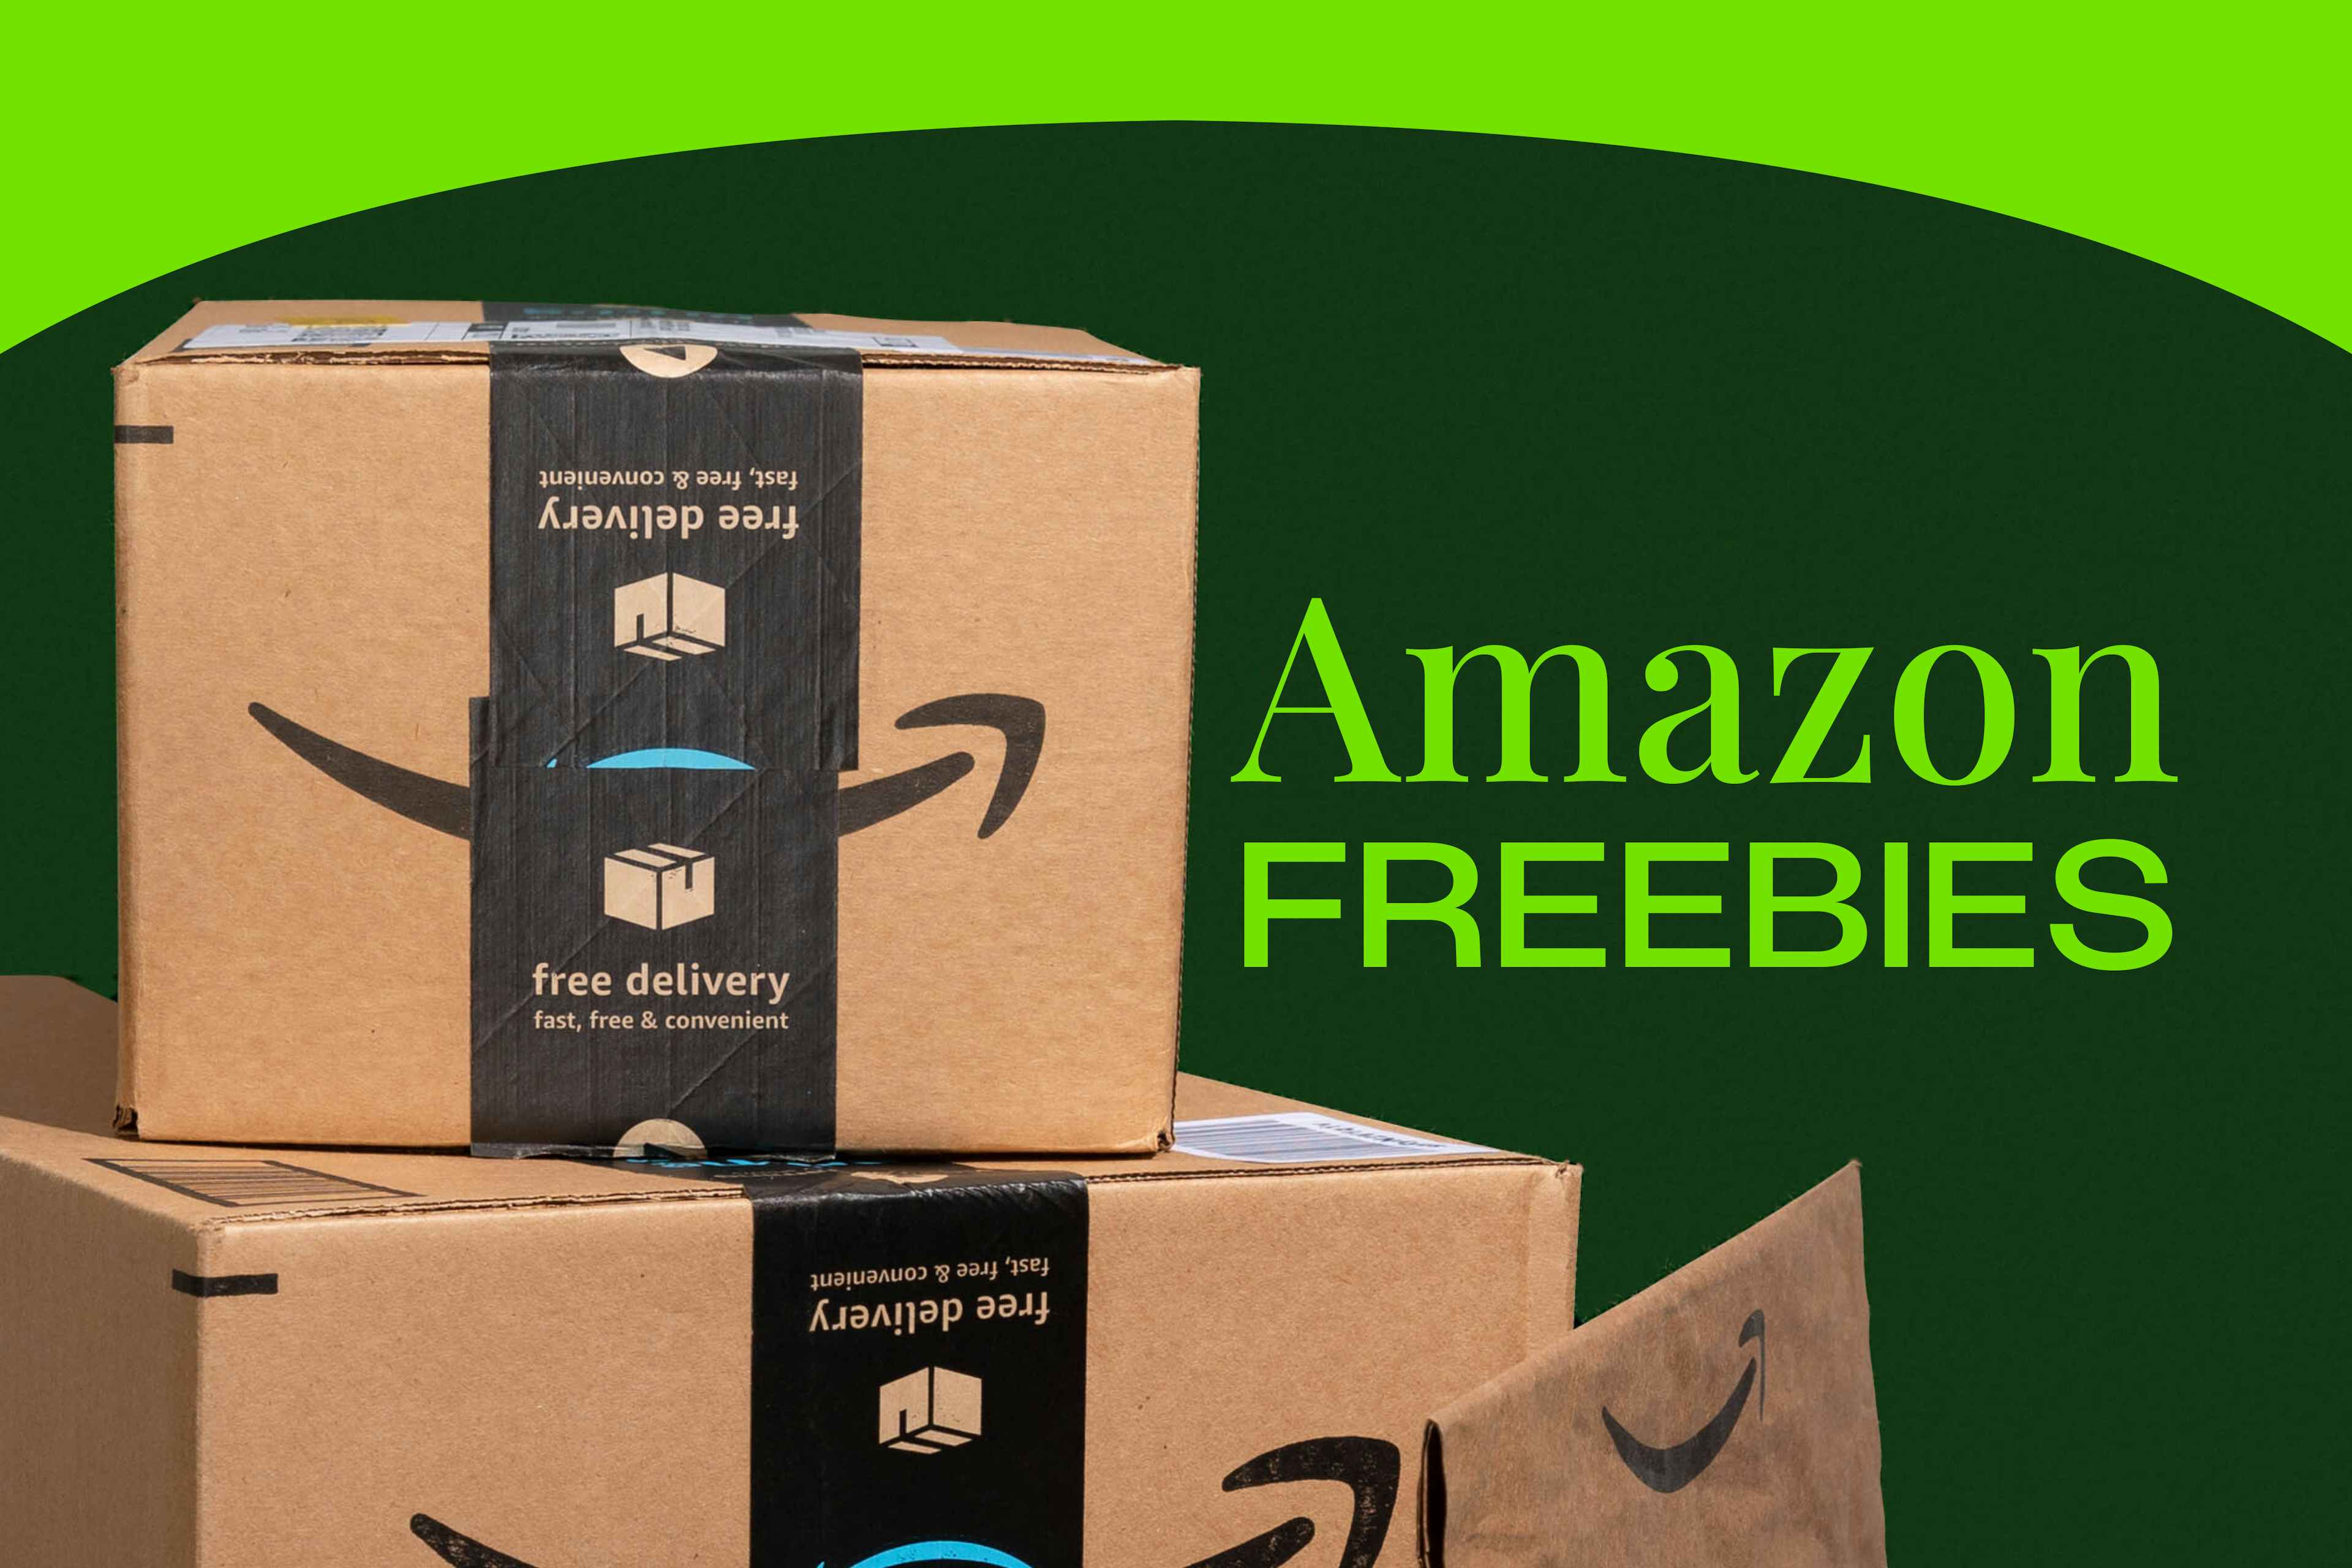 Two stacked Amazon boxes for Amazon freebies.